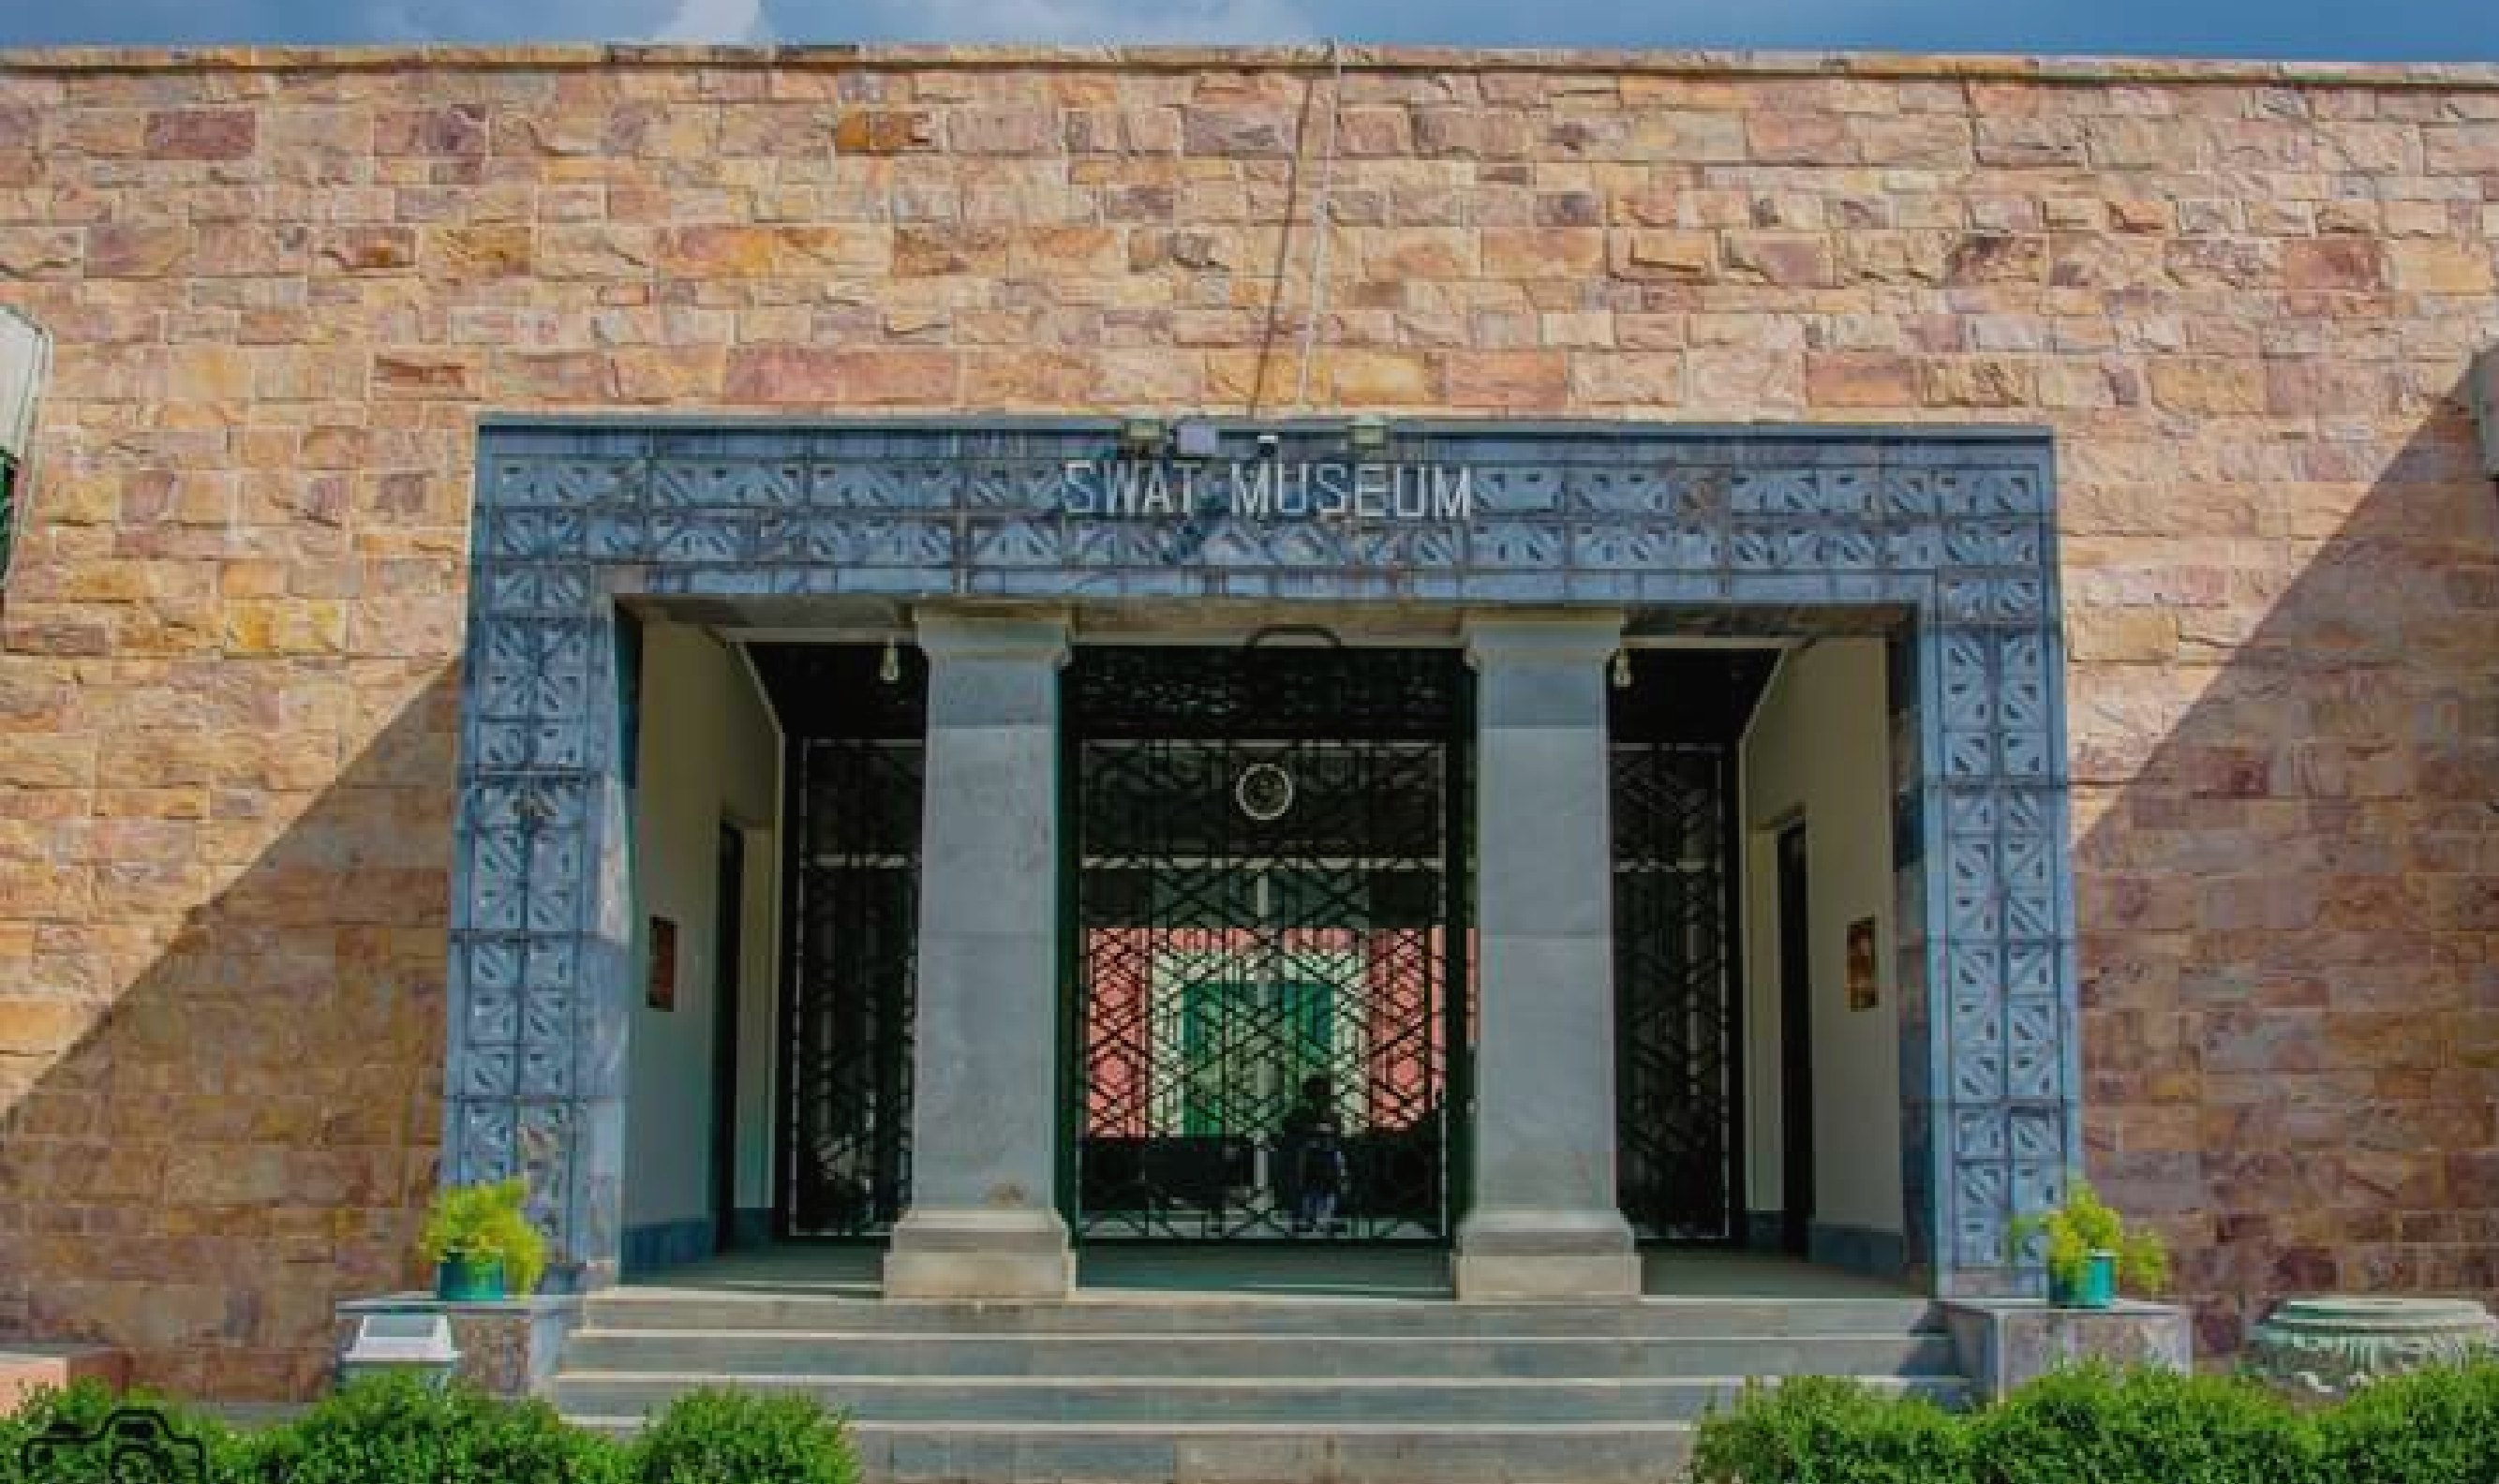 5. Swat Museum: